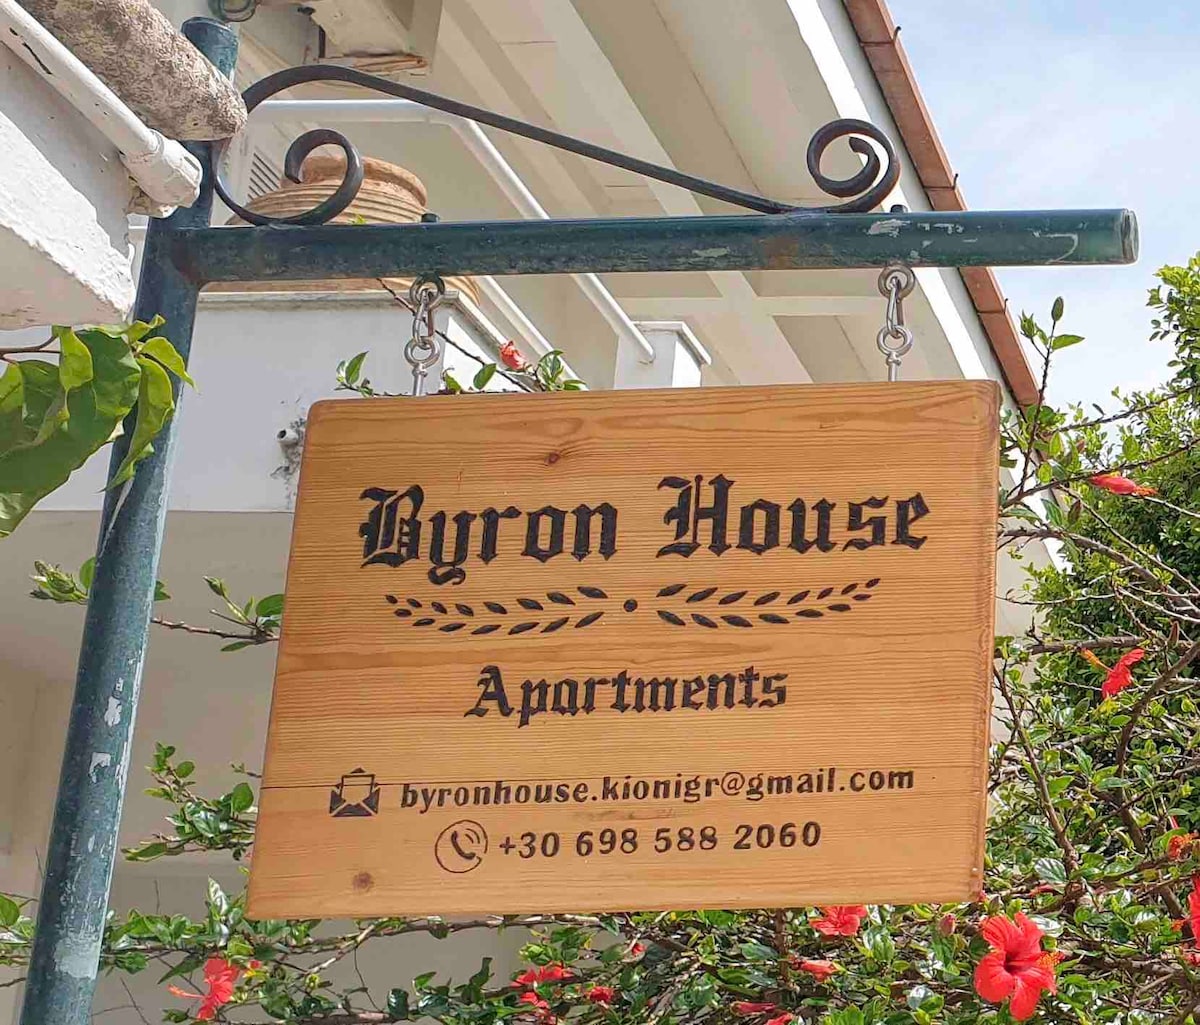 Byron House - Apartment 2, Central Kioni